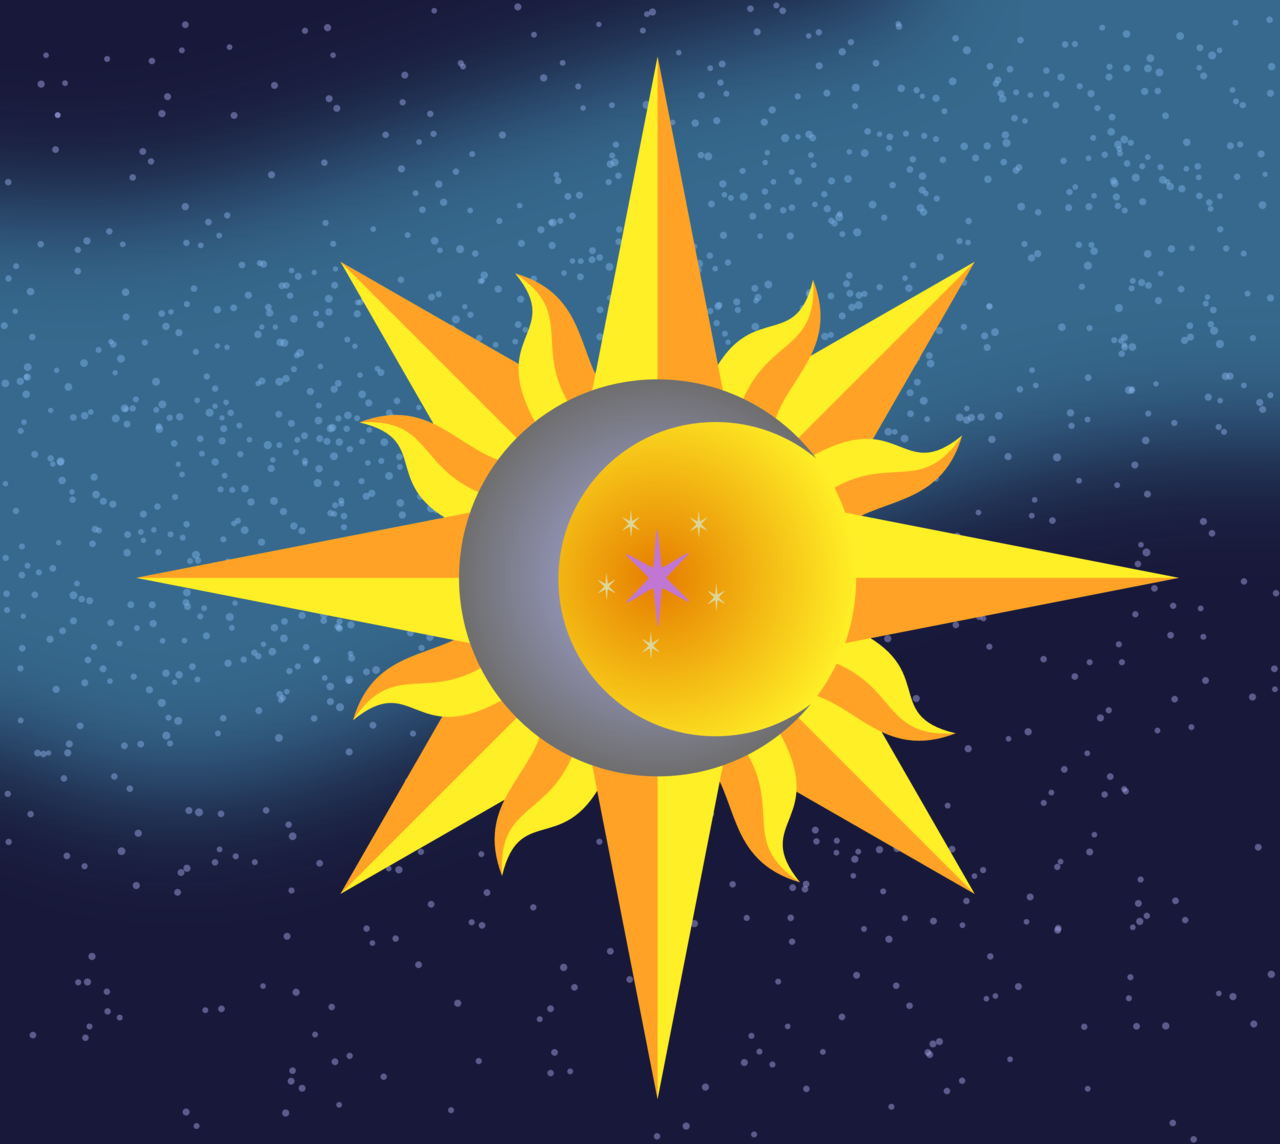 Sun, Moon, and Stars Wallpaper by The Intelligentleman on DeviantArt